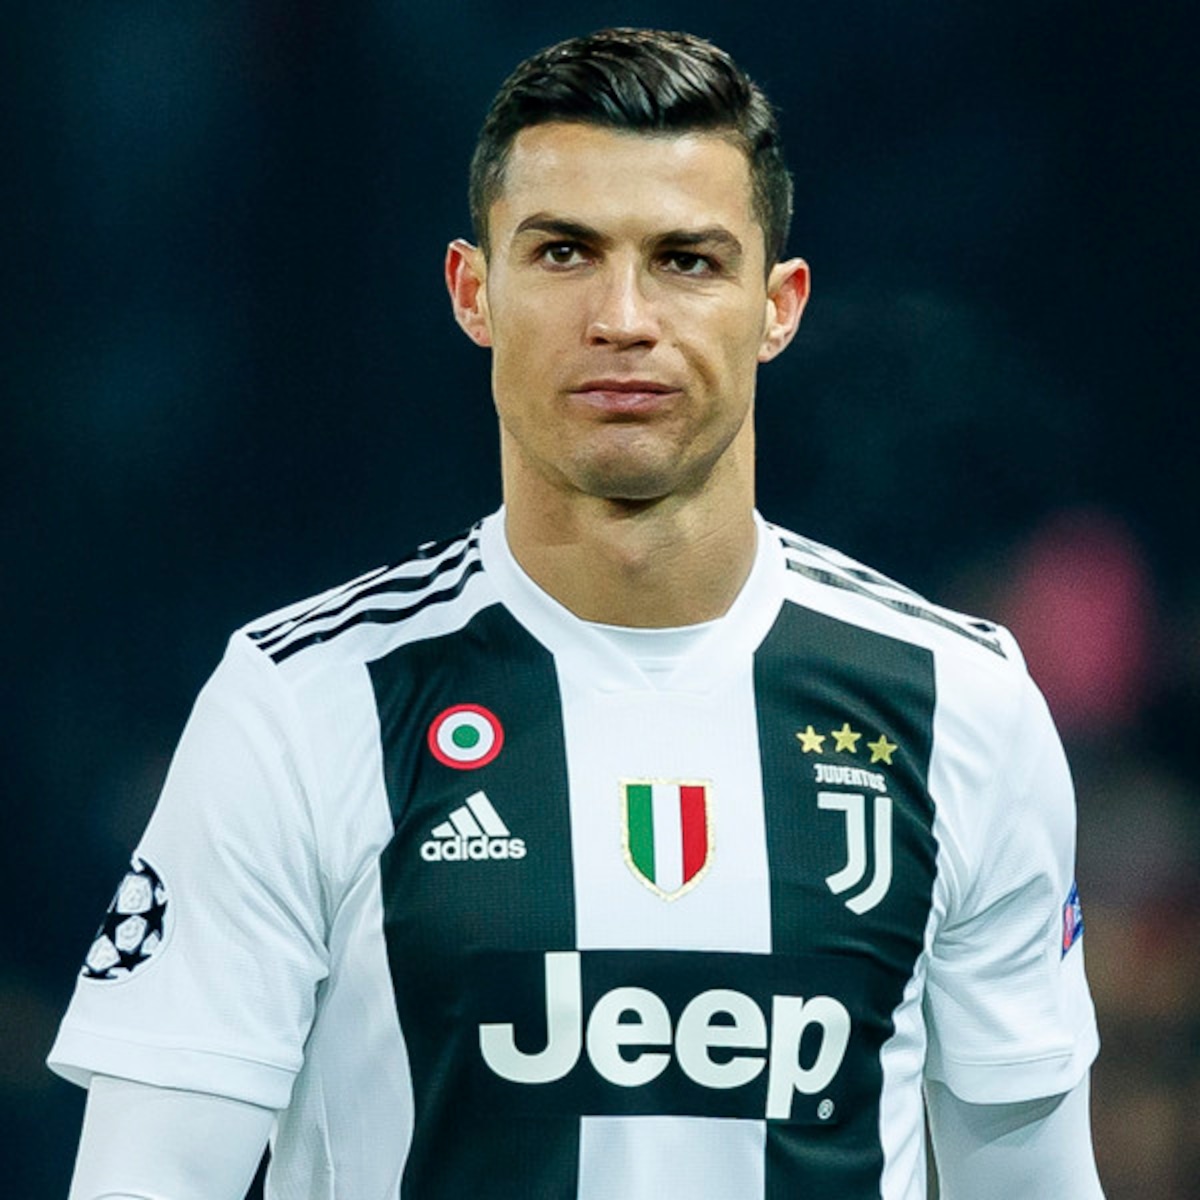 Cristiano Ronaldo Just Reached a Major Instagram Milestone - E! Online